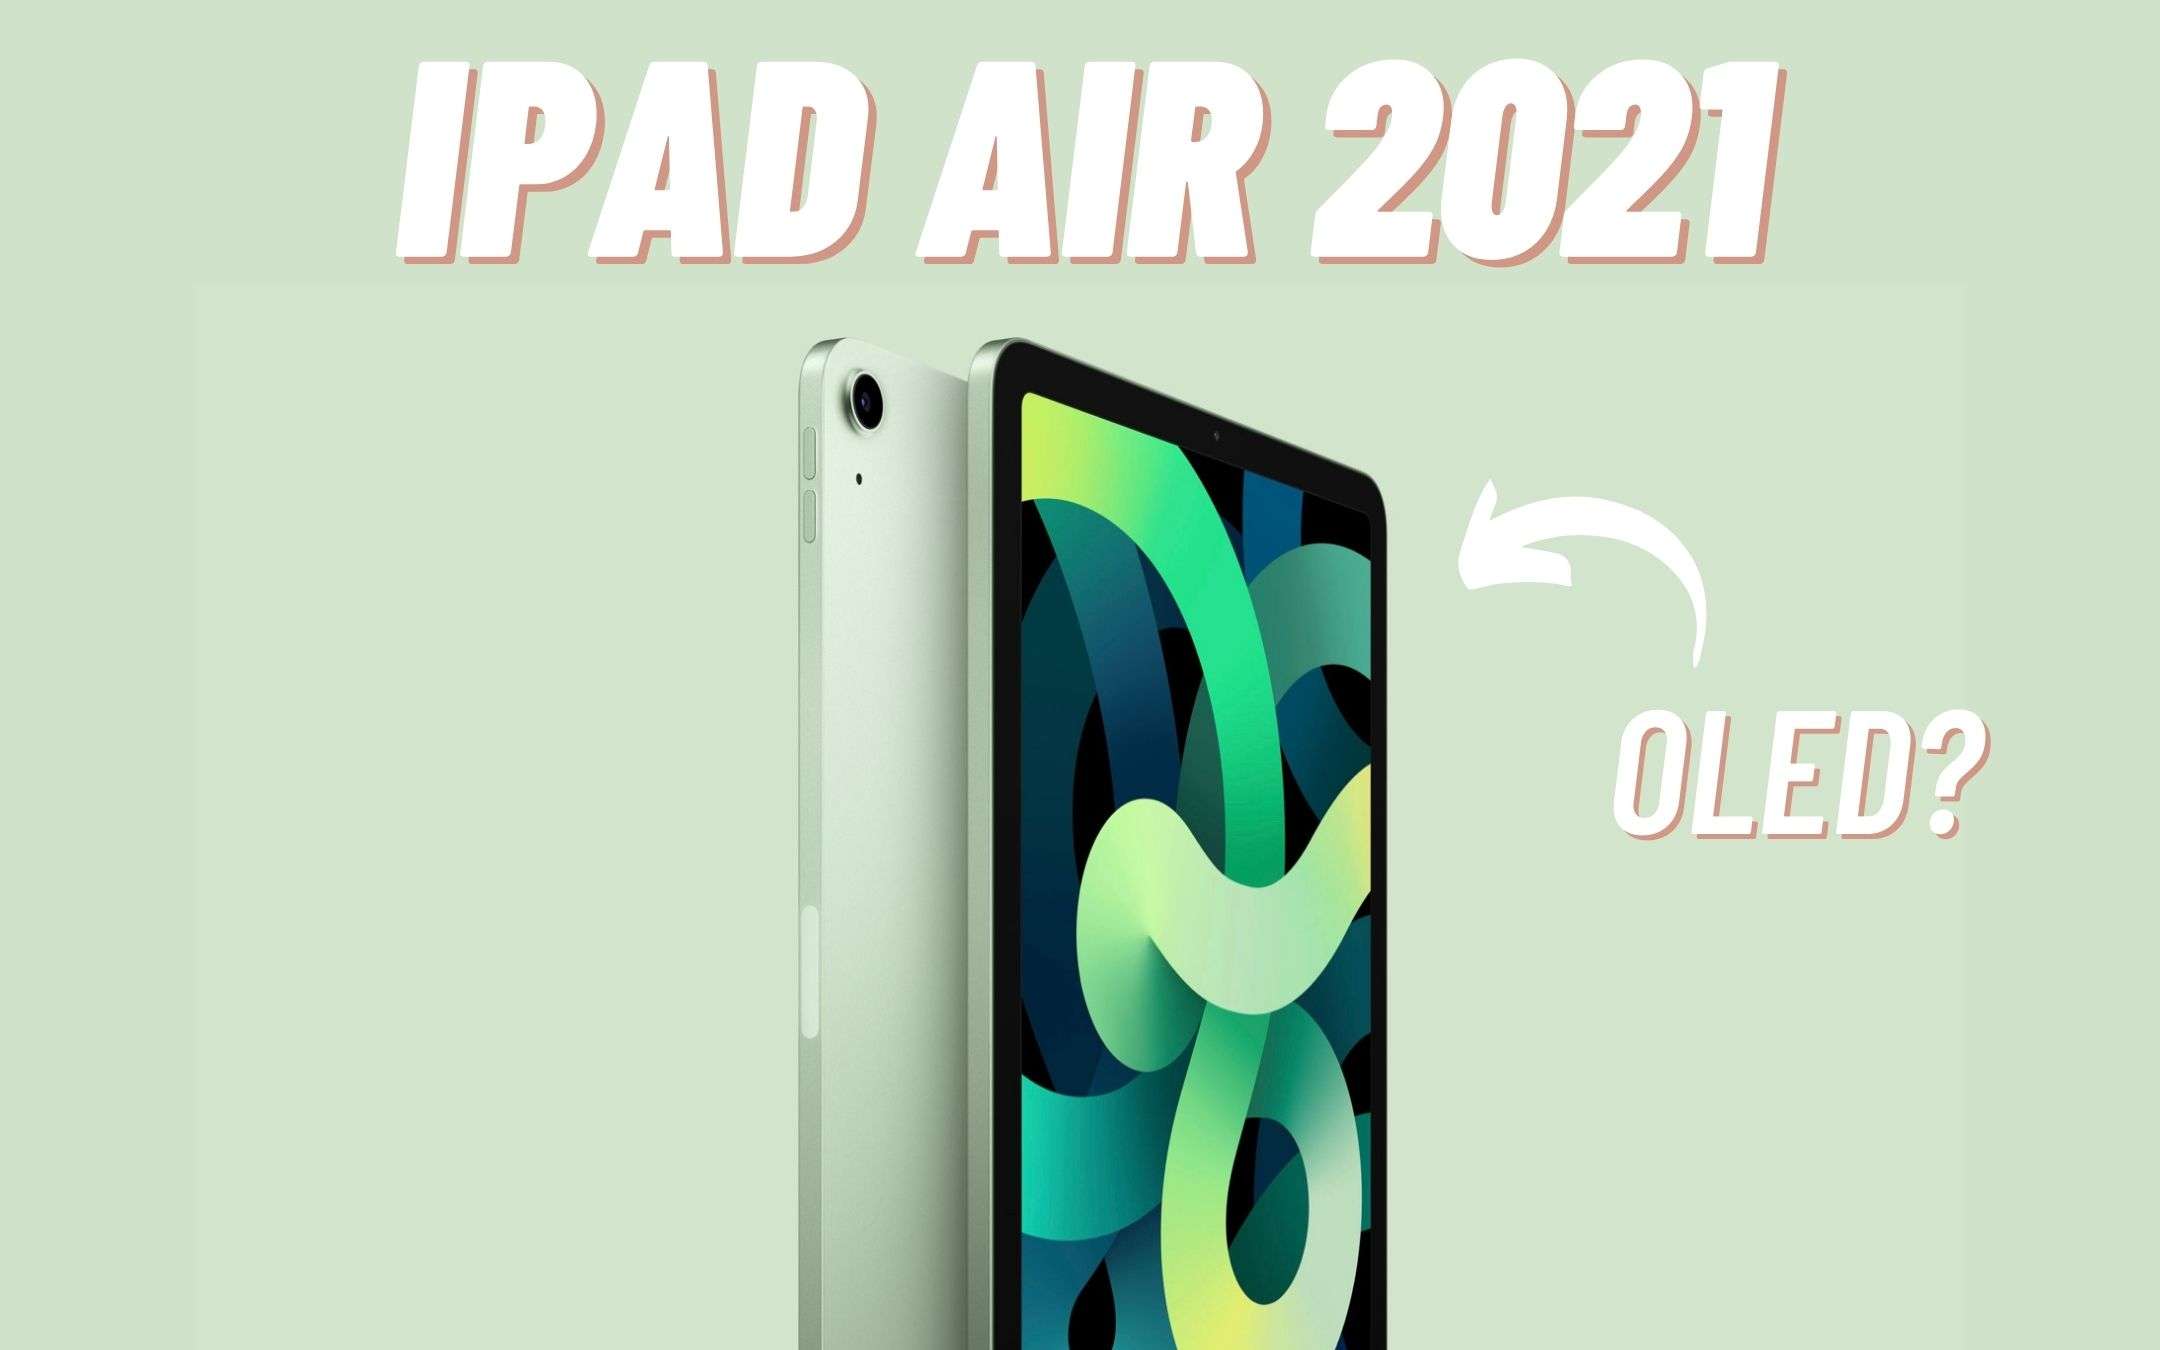 In arrivo un iPad Air con display OLED nel 2022